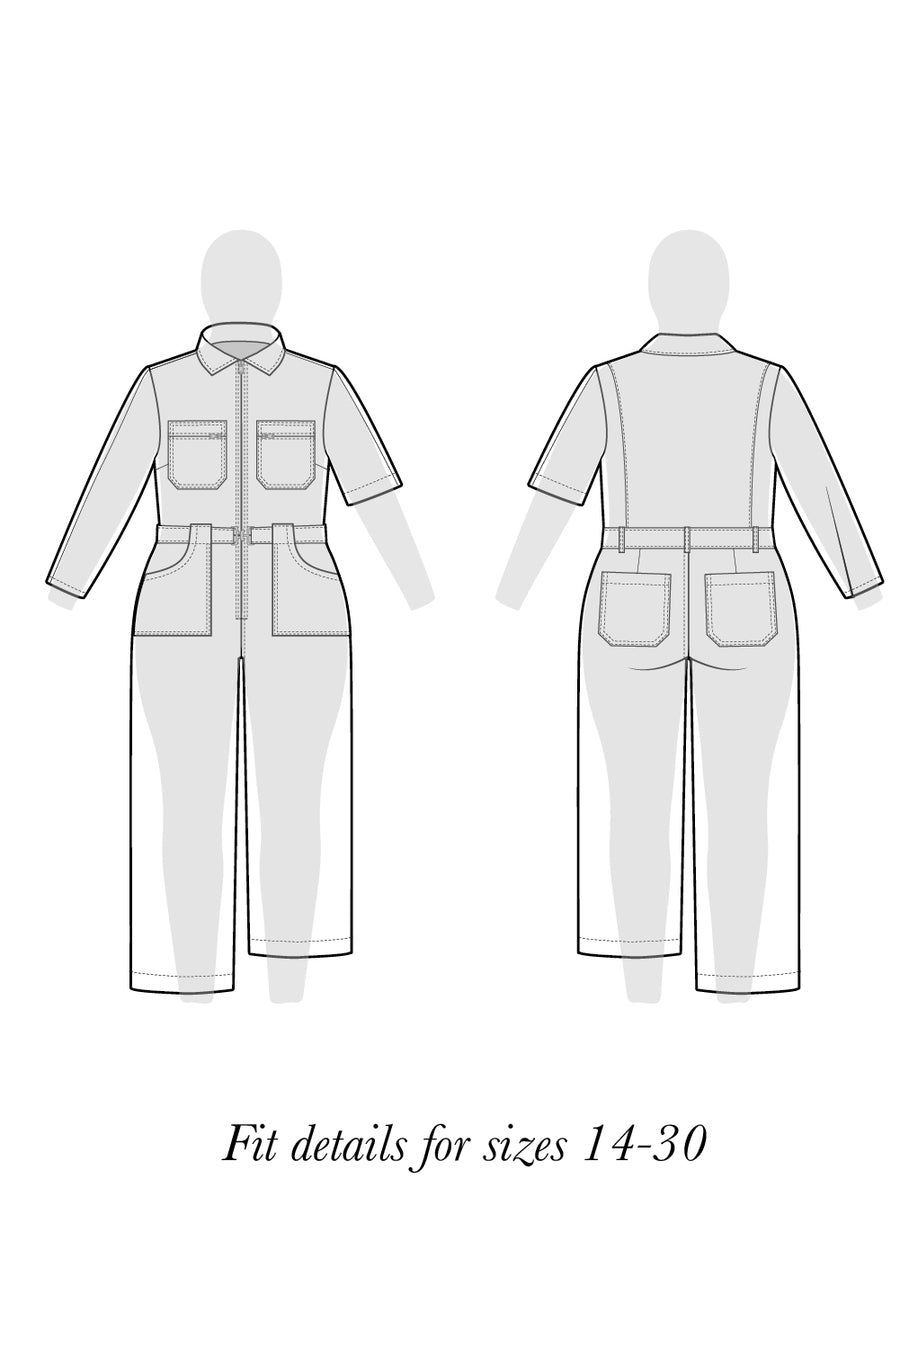 Blanca Flight Suit pattern / Boiler suit pattern from Closet Core Patterns - Technical drawings